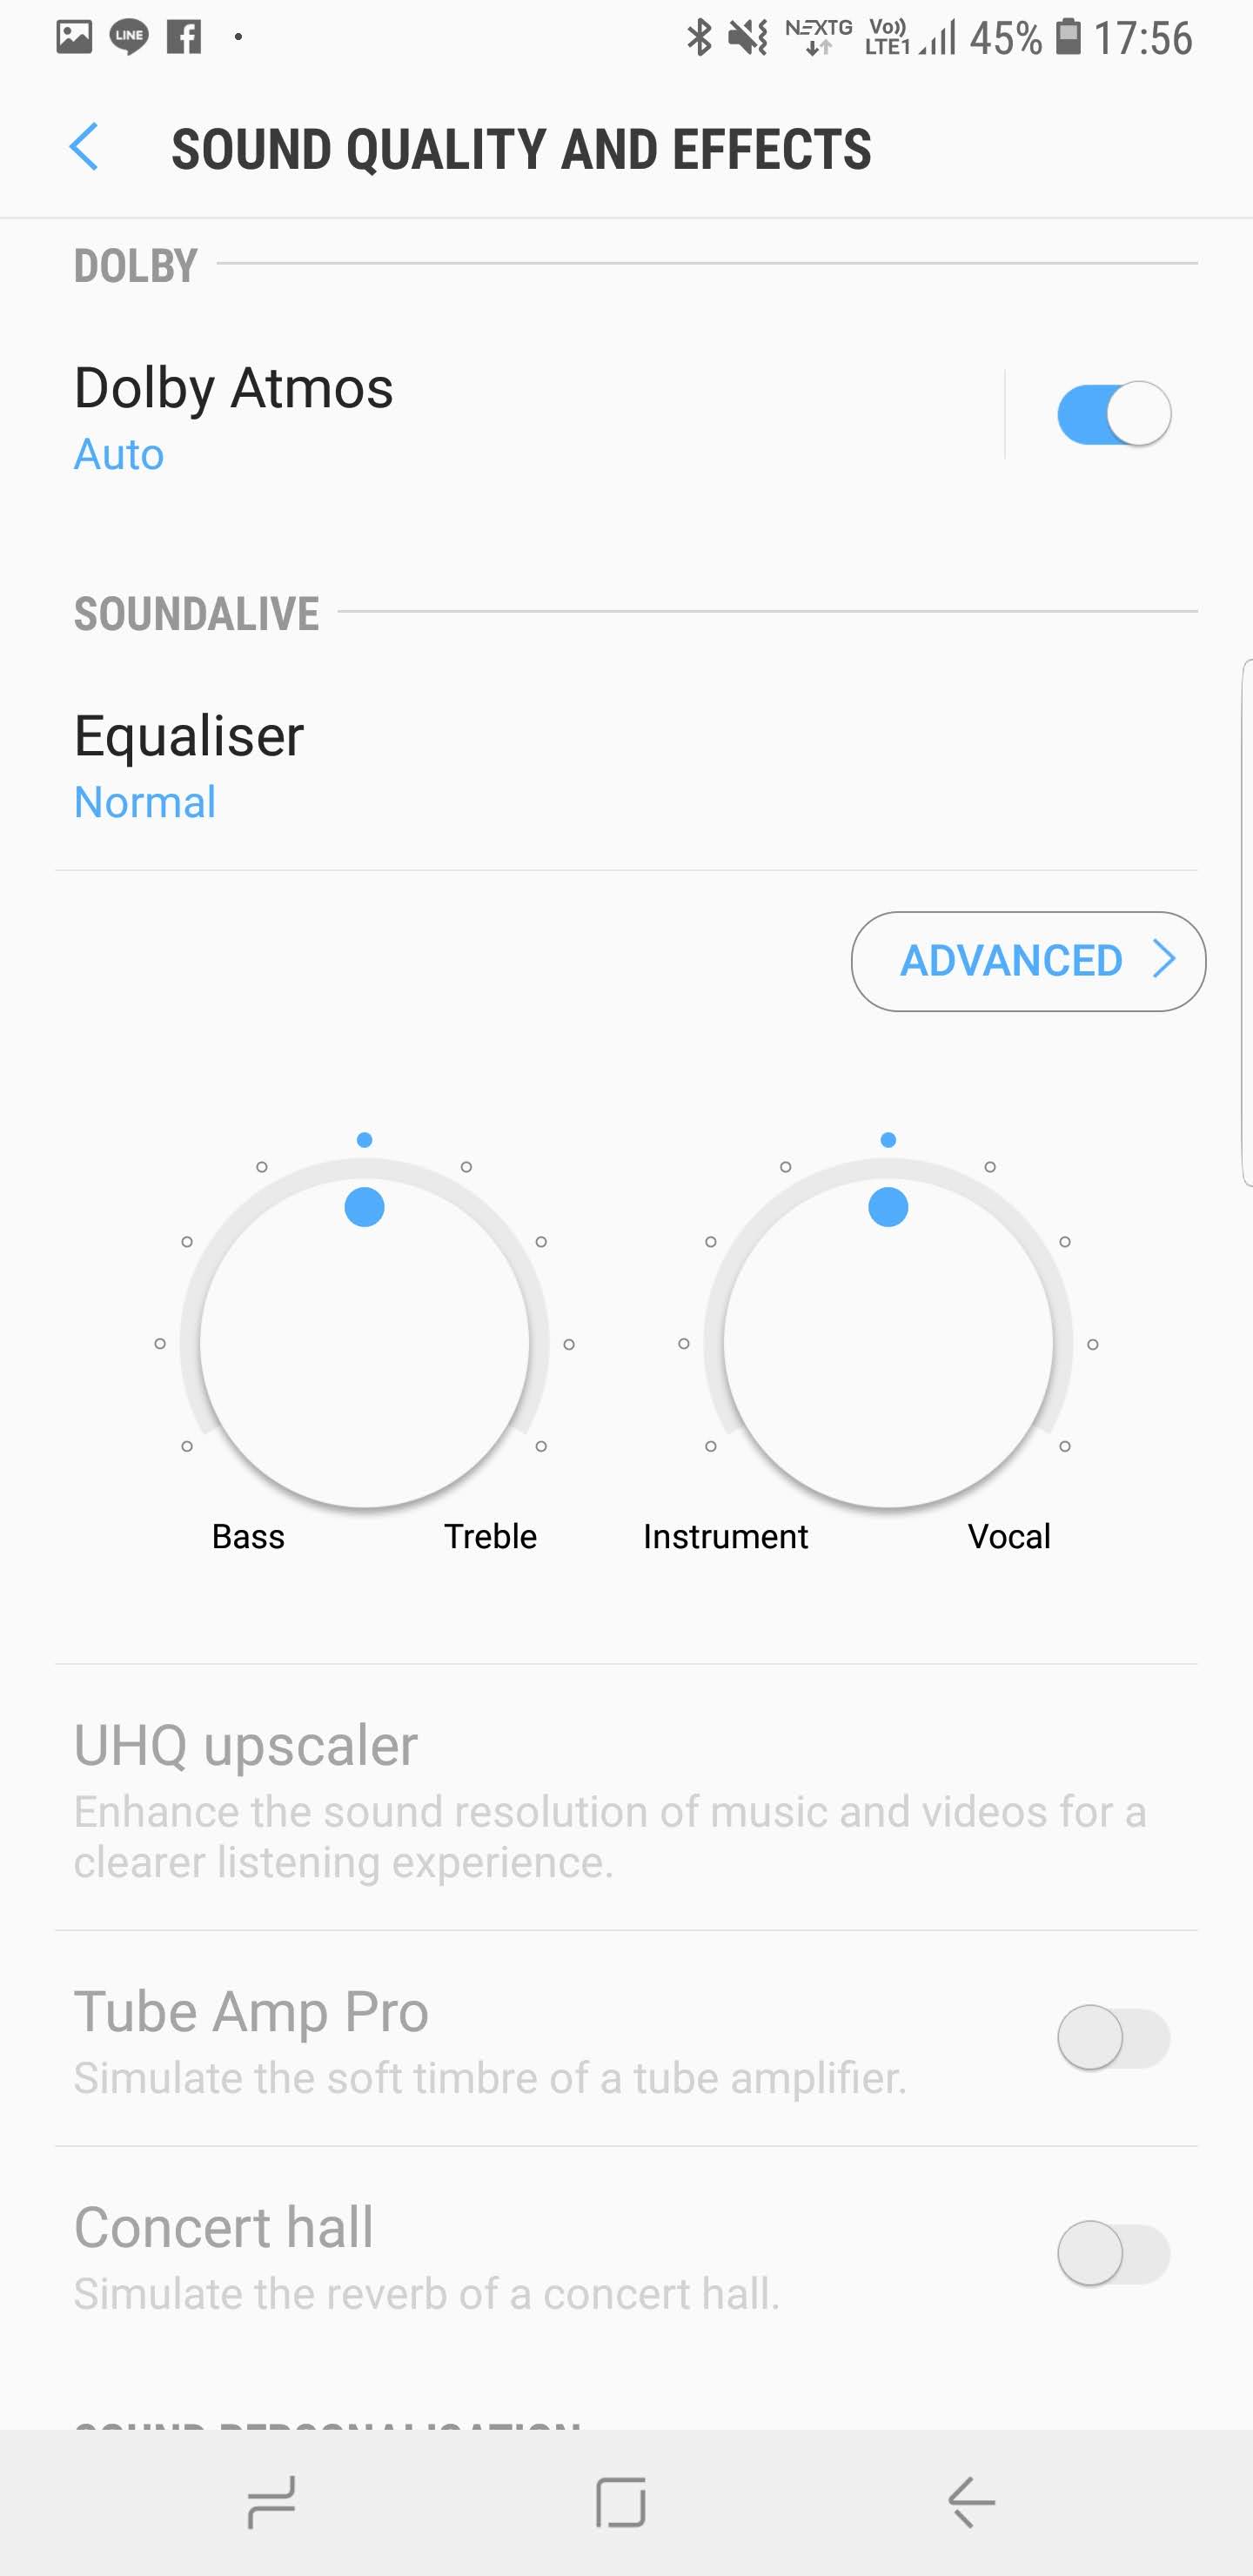 Samsung Galaxy Note 9 Sound Quality & Effect